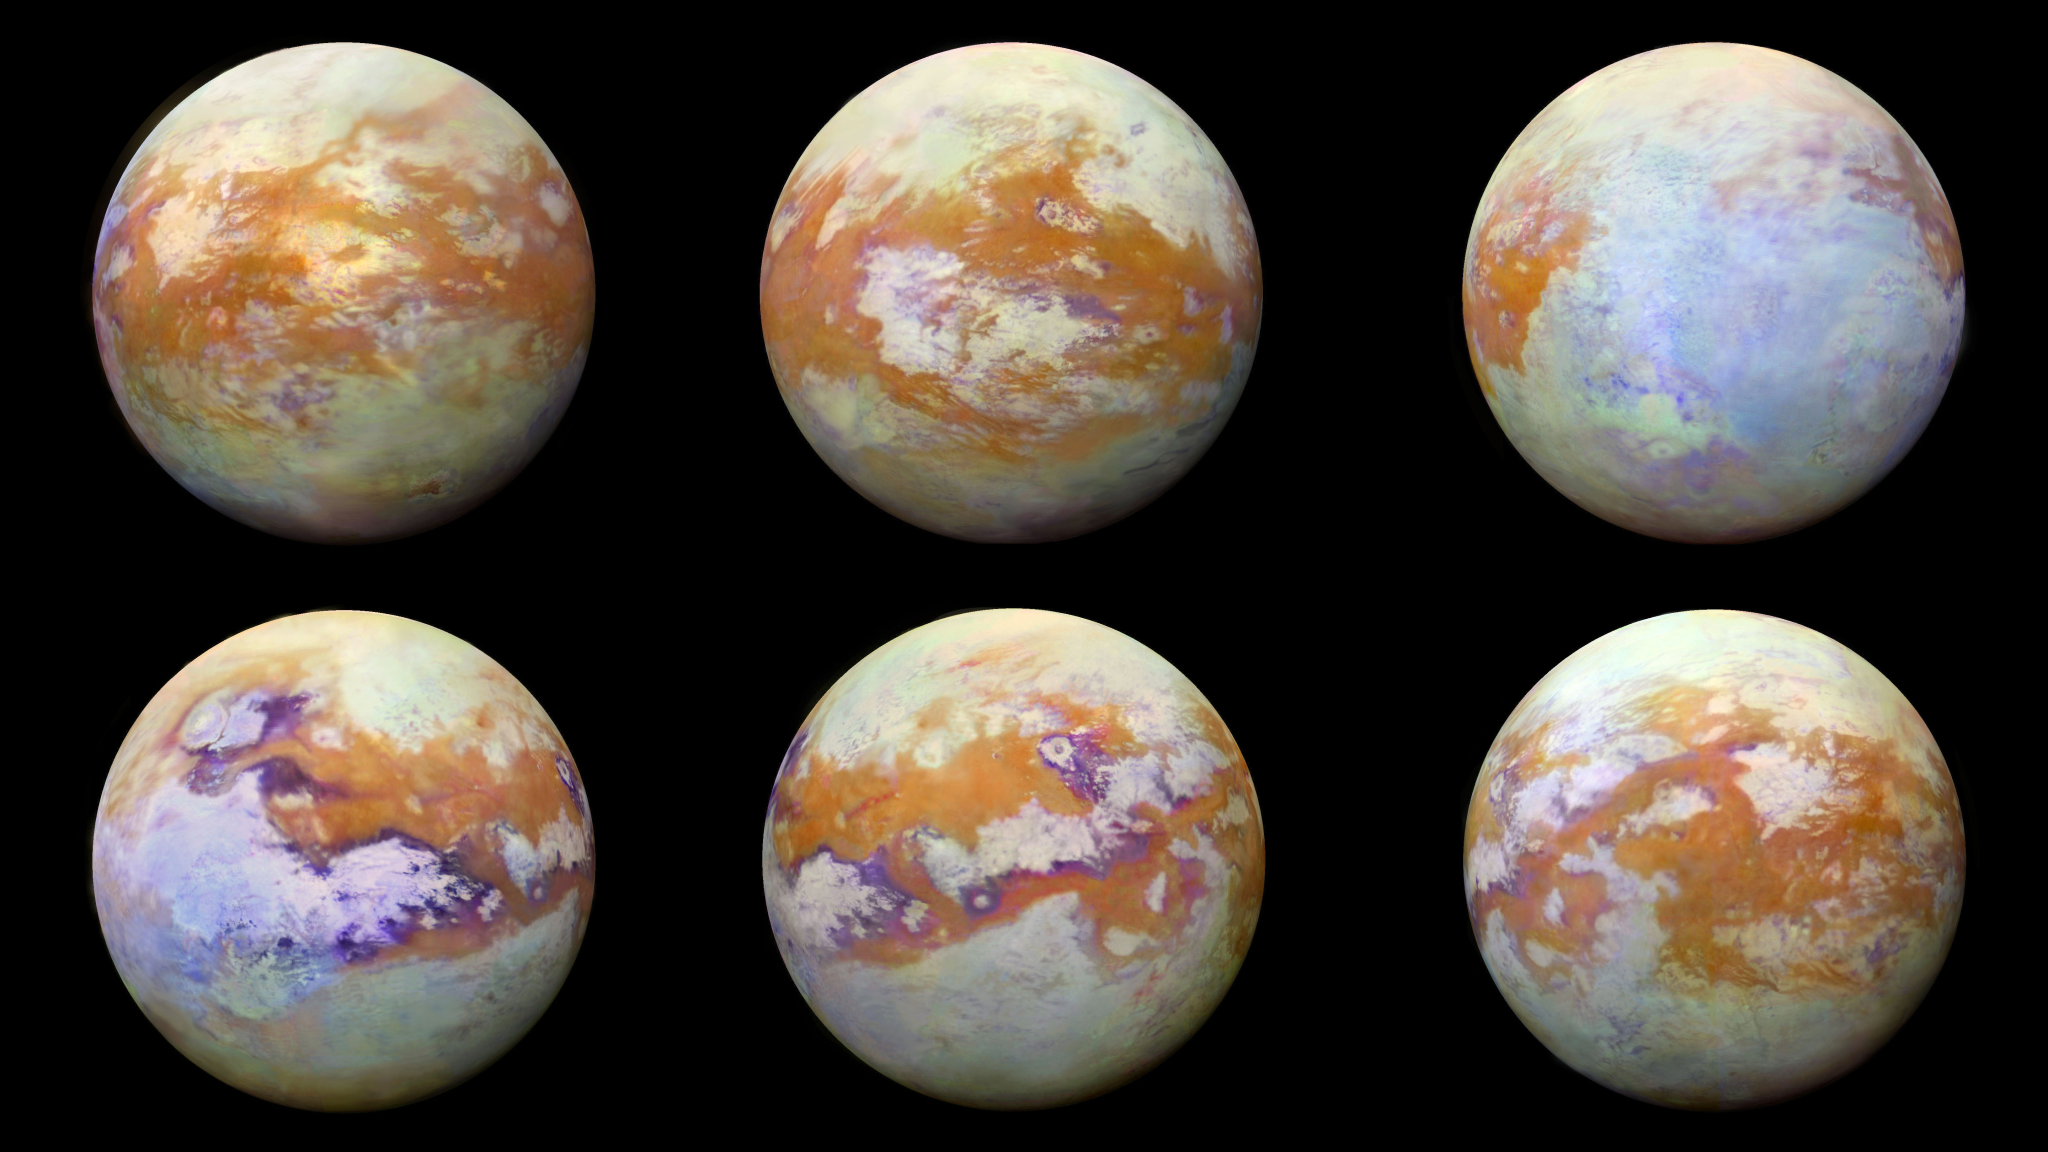 Titan's surface seen in infrared light